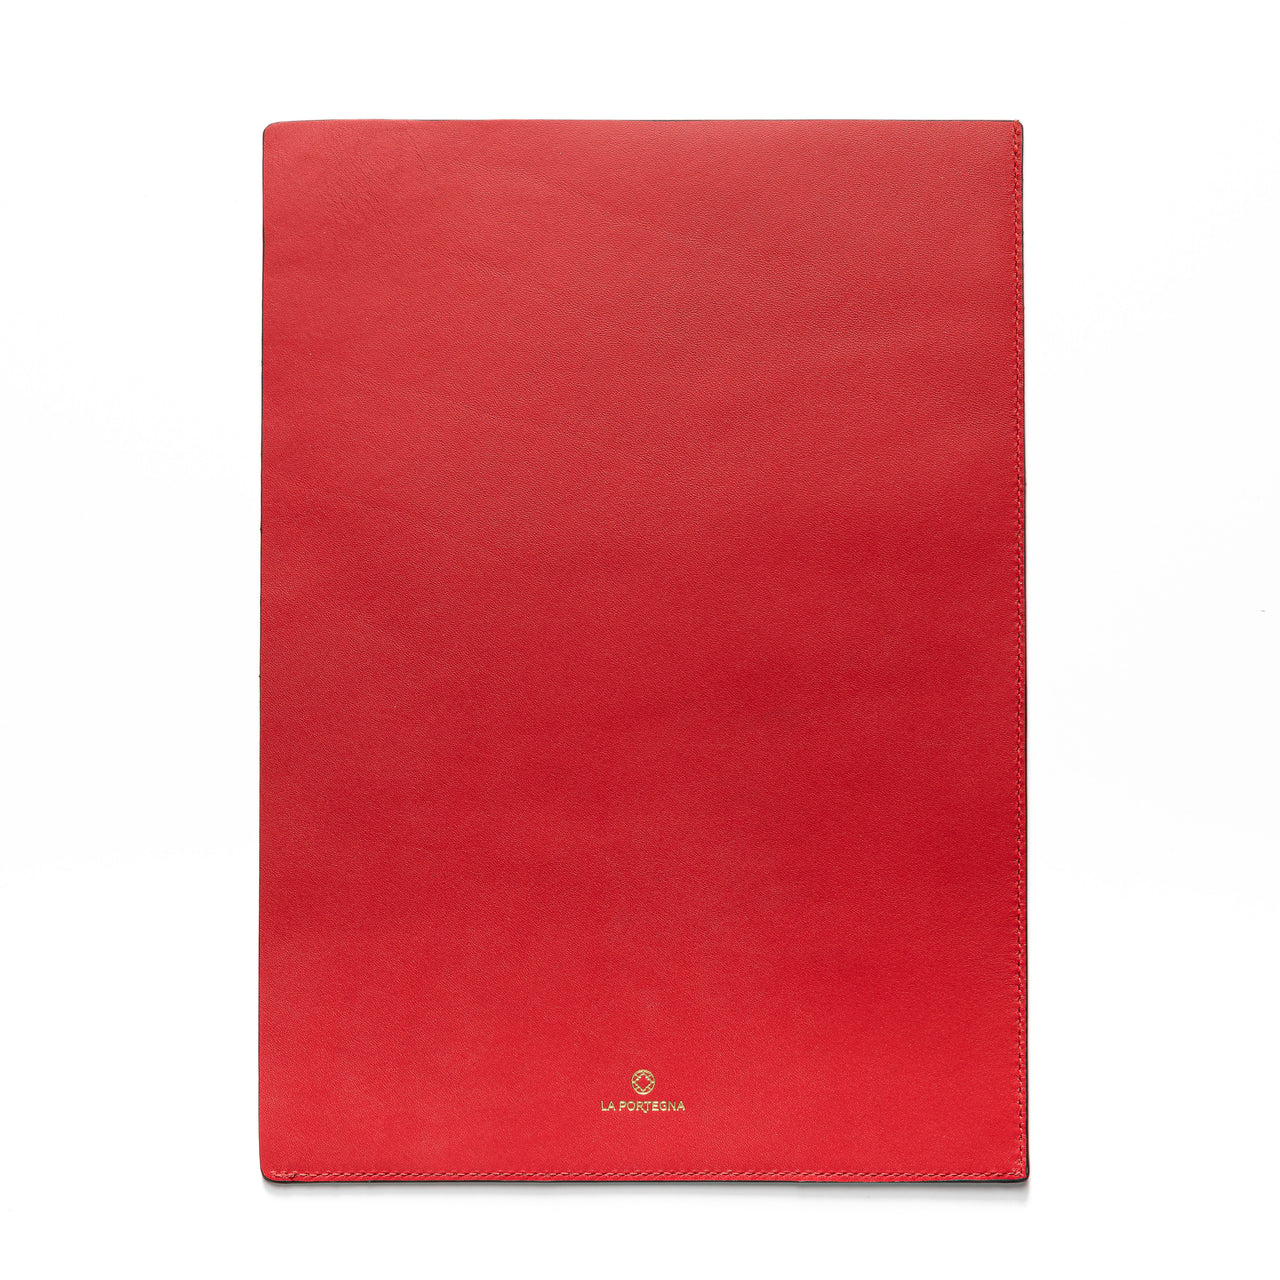 Porte-documents rouge